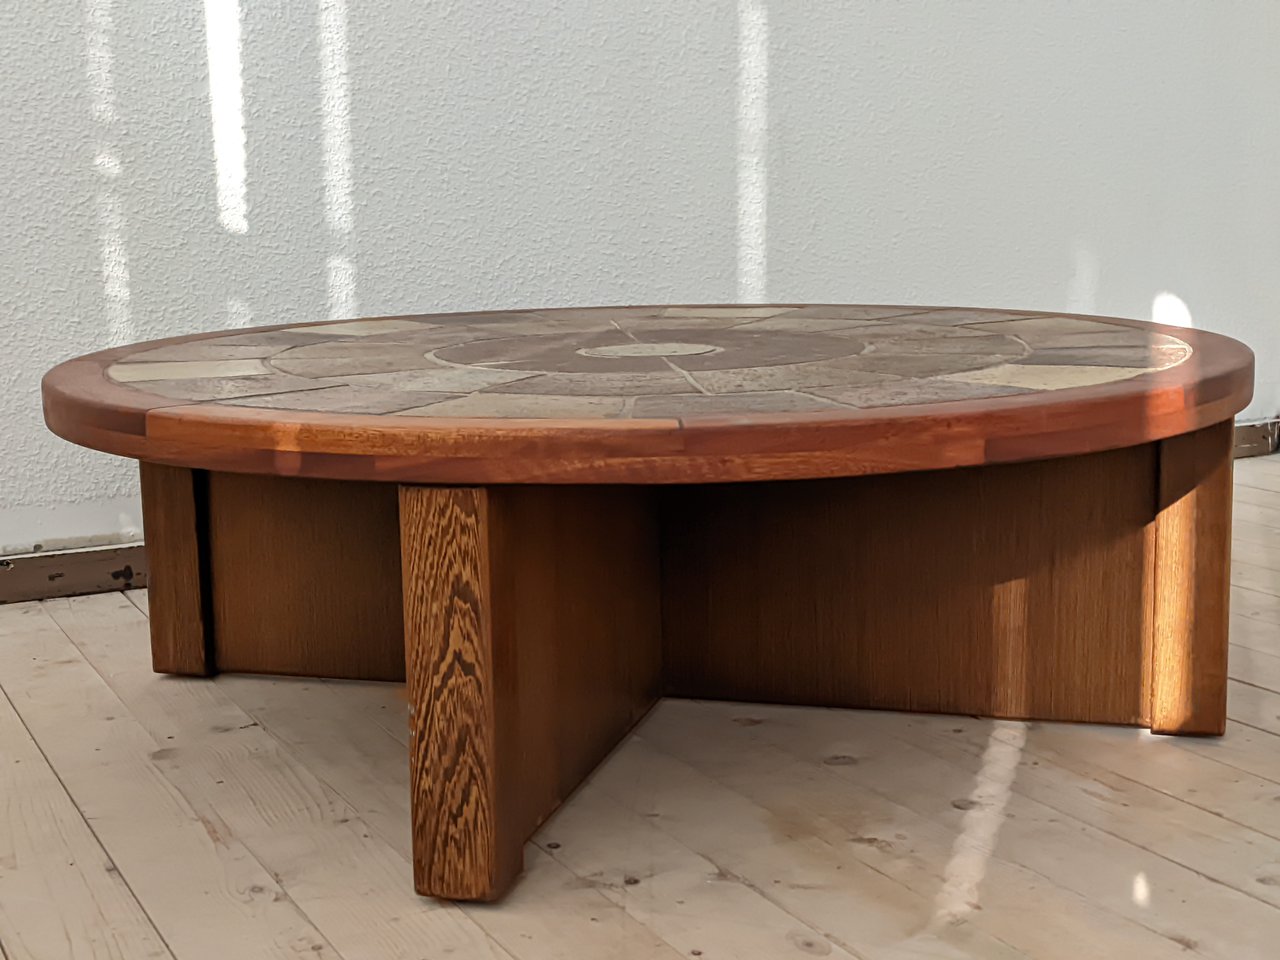 Image 2 of Tue Poulsen Haslev Danmark coffee table